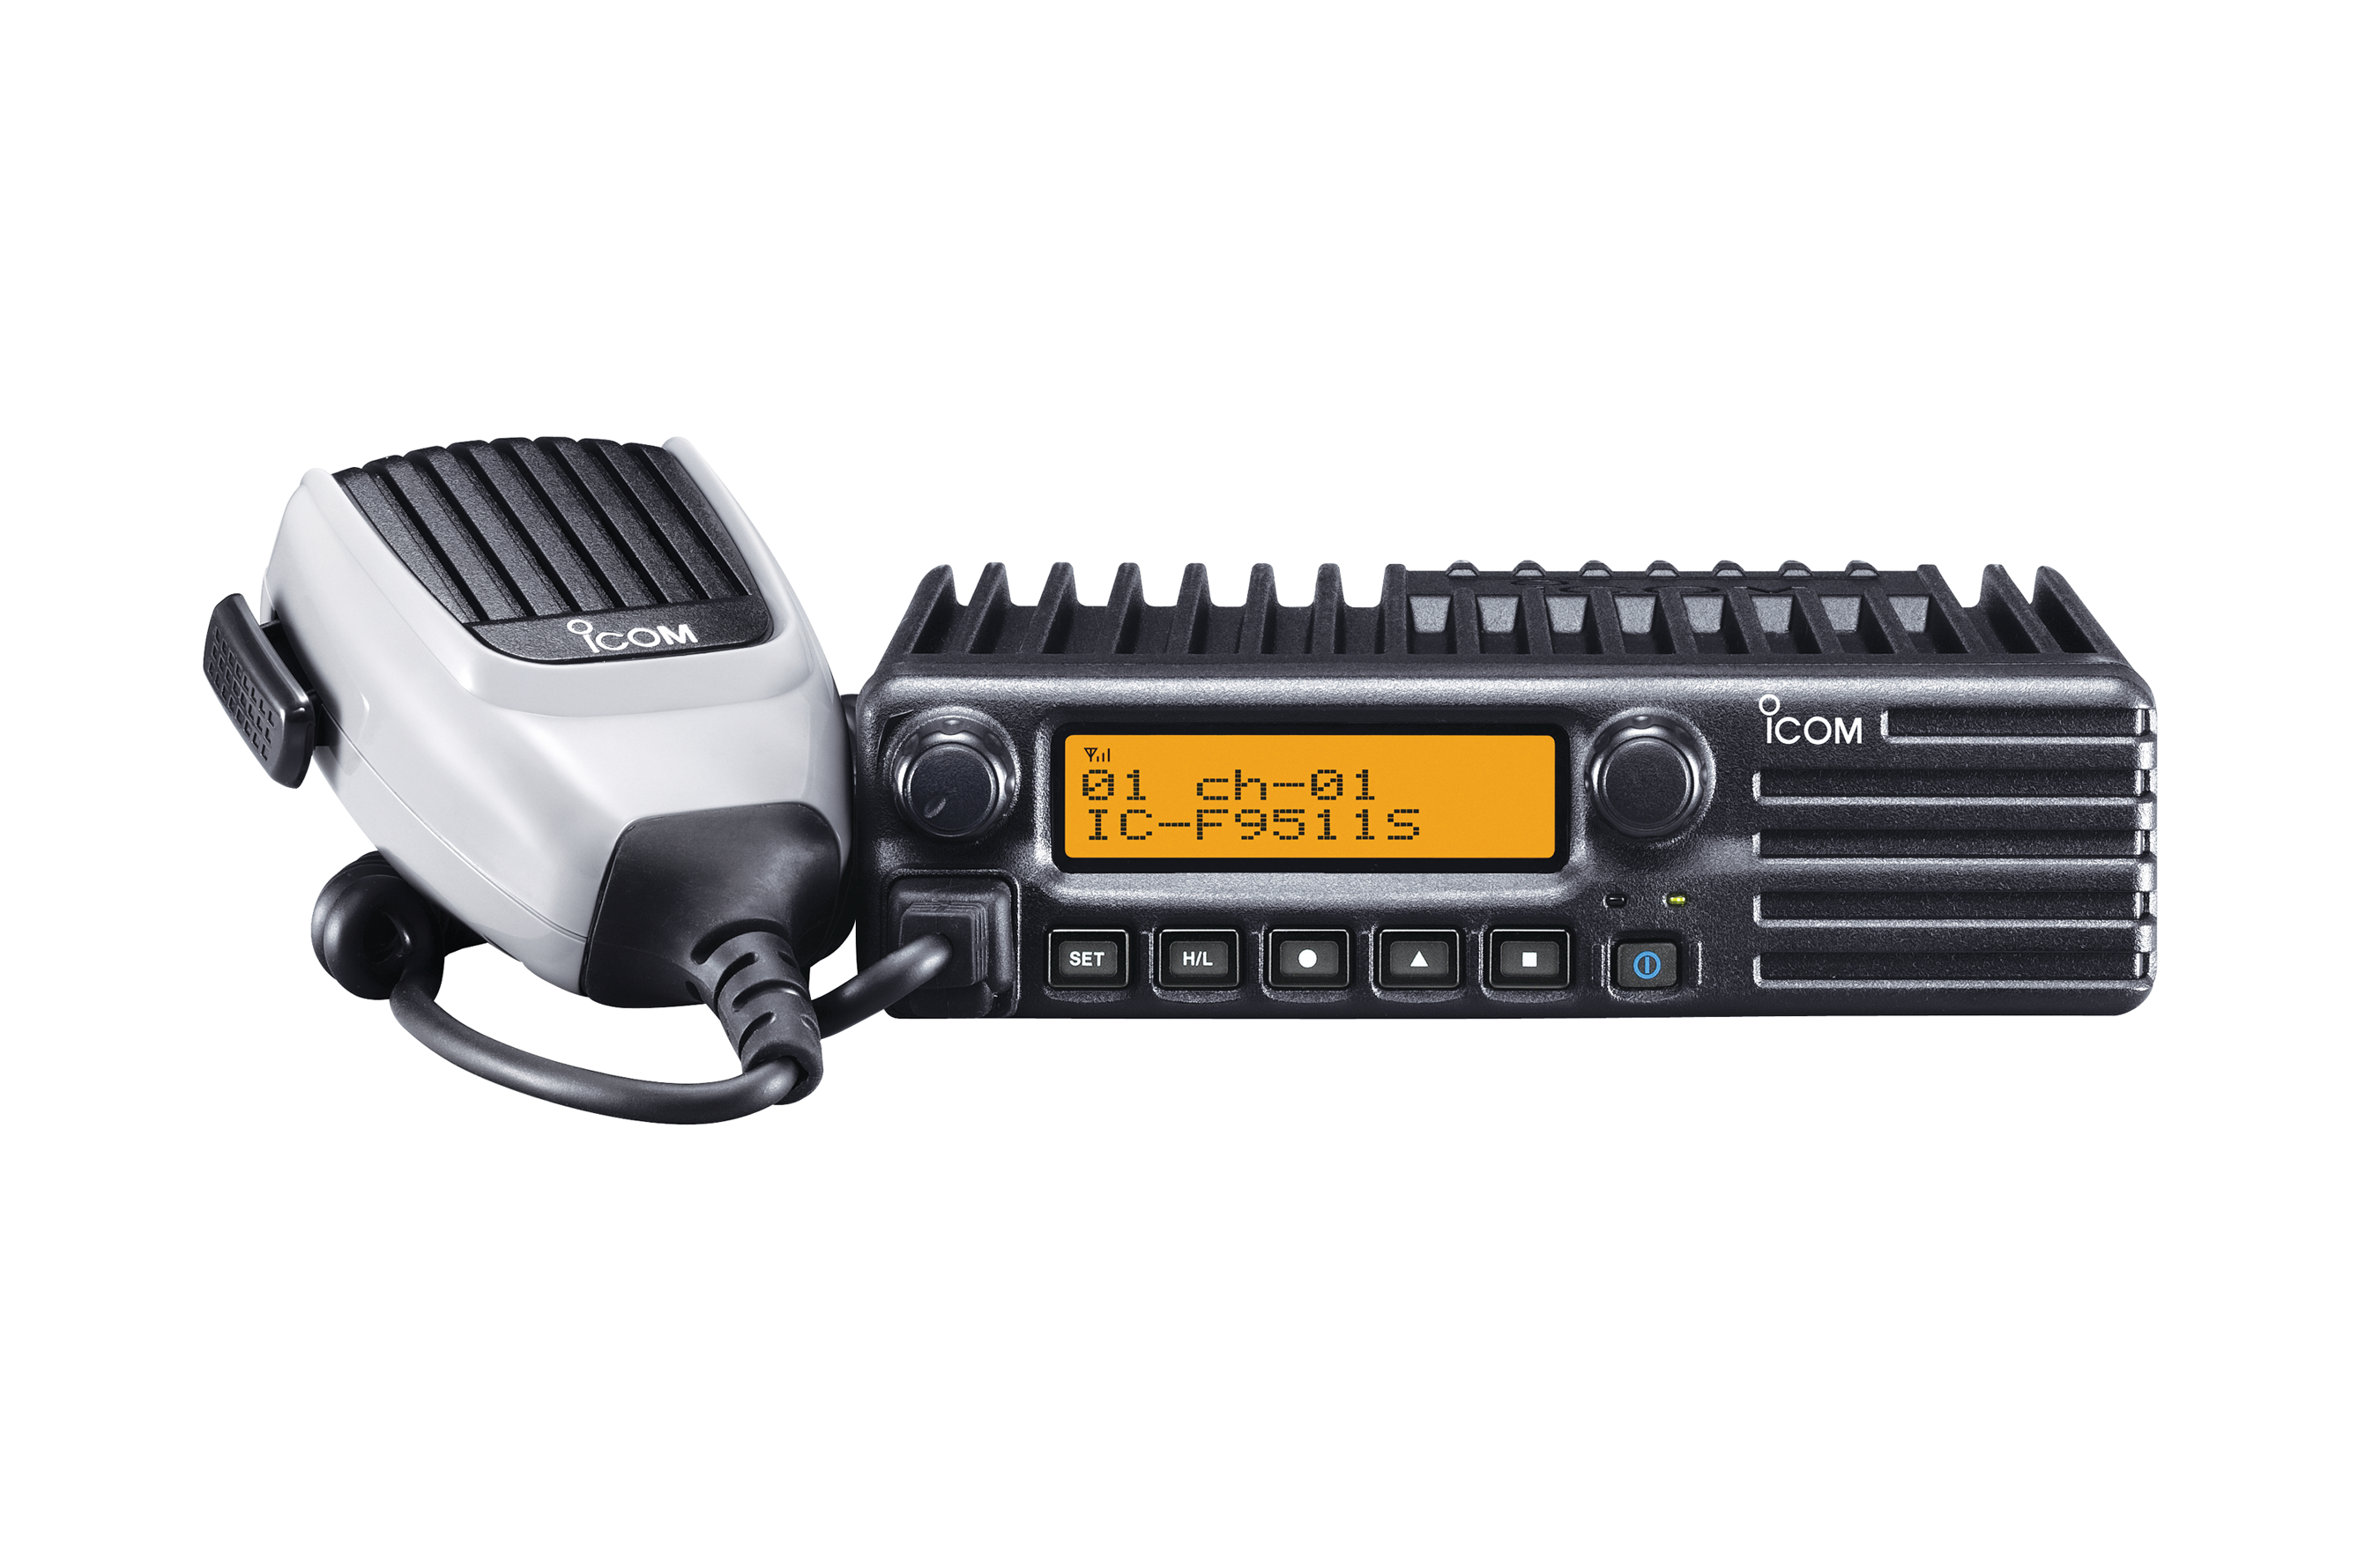 8 CHANNEL TWO WAY RADIO VHF 136-174 MHZ NEW ICOM IC-F5011-51 50 WATT 